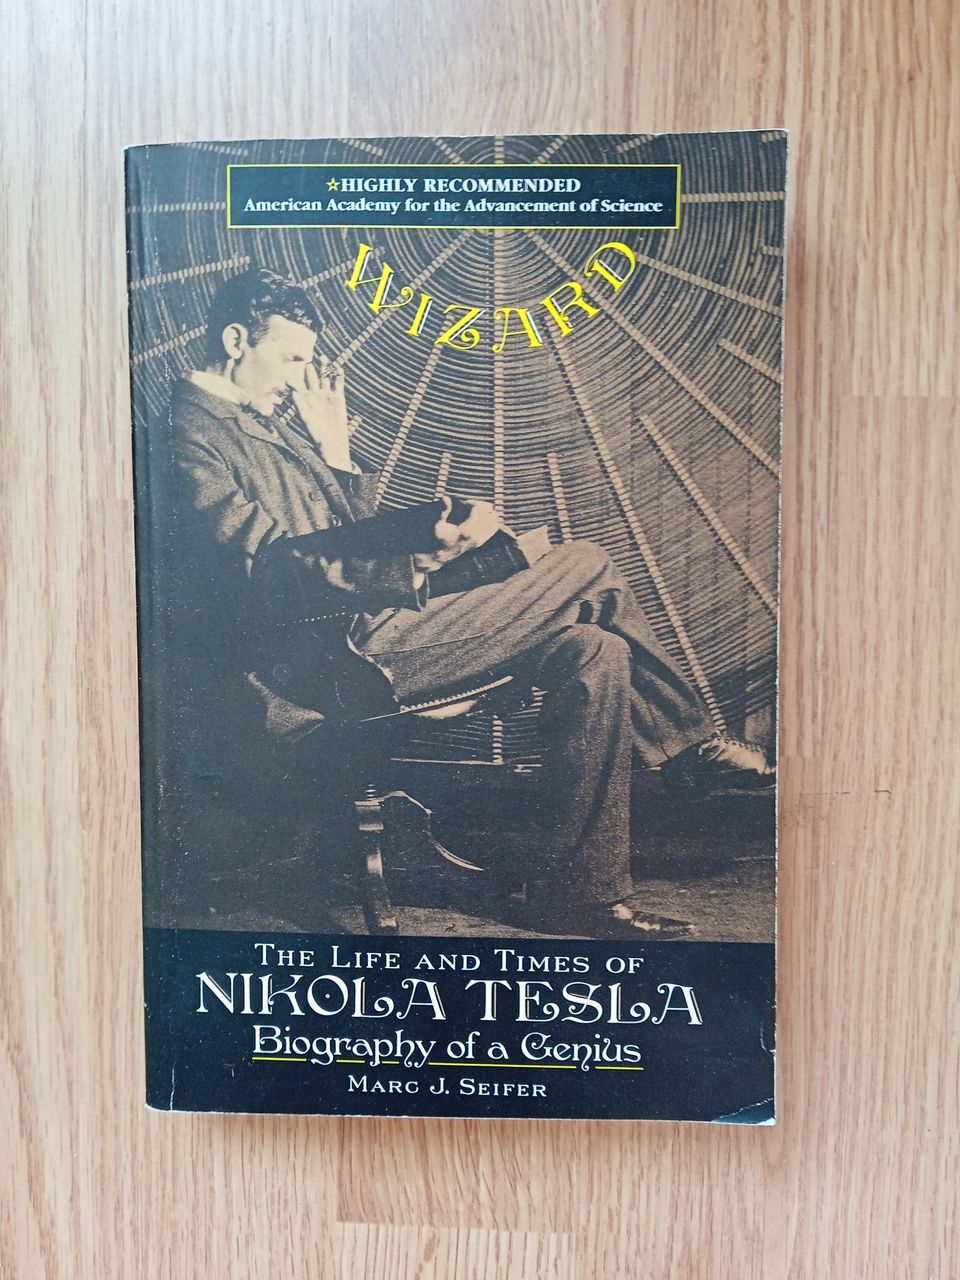 Nikola Tesla kirja